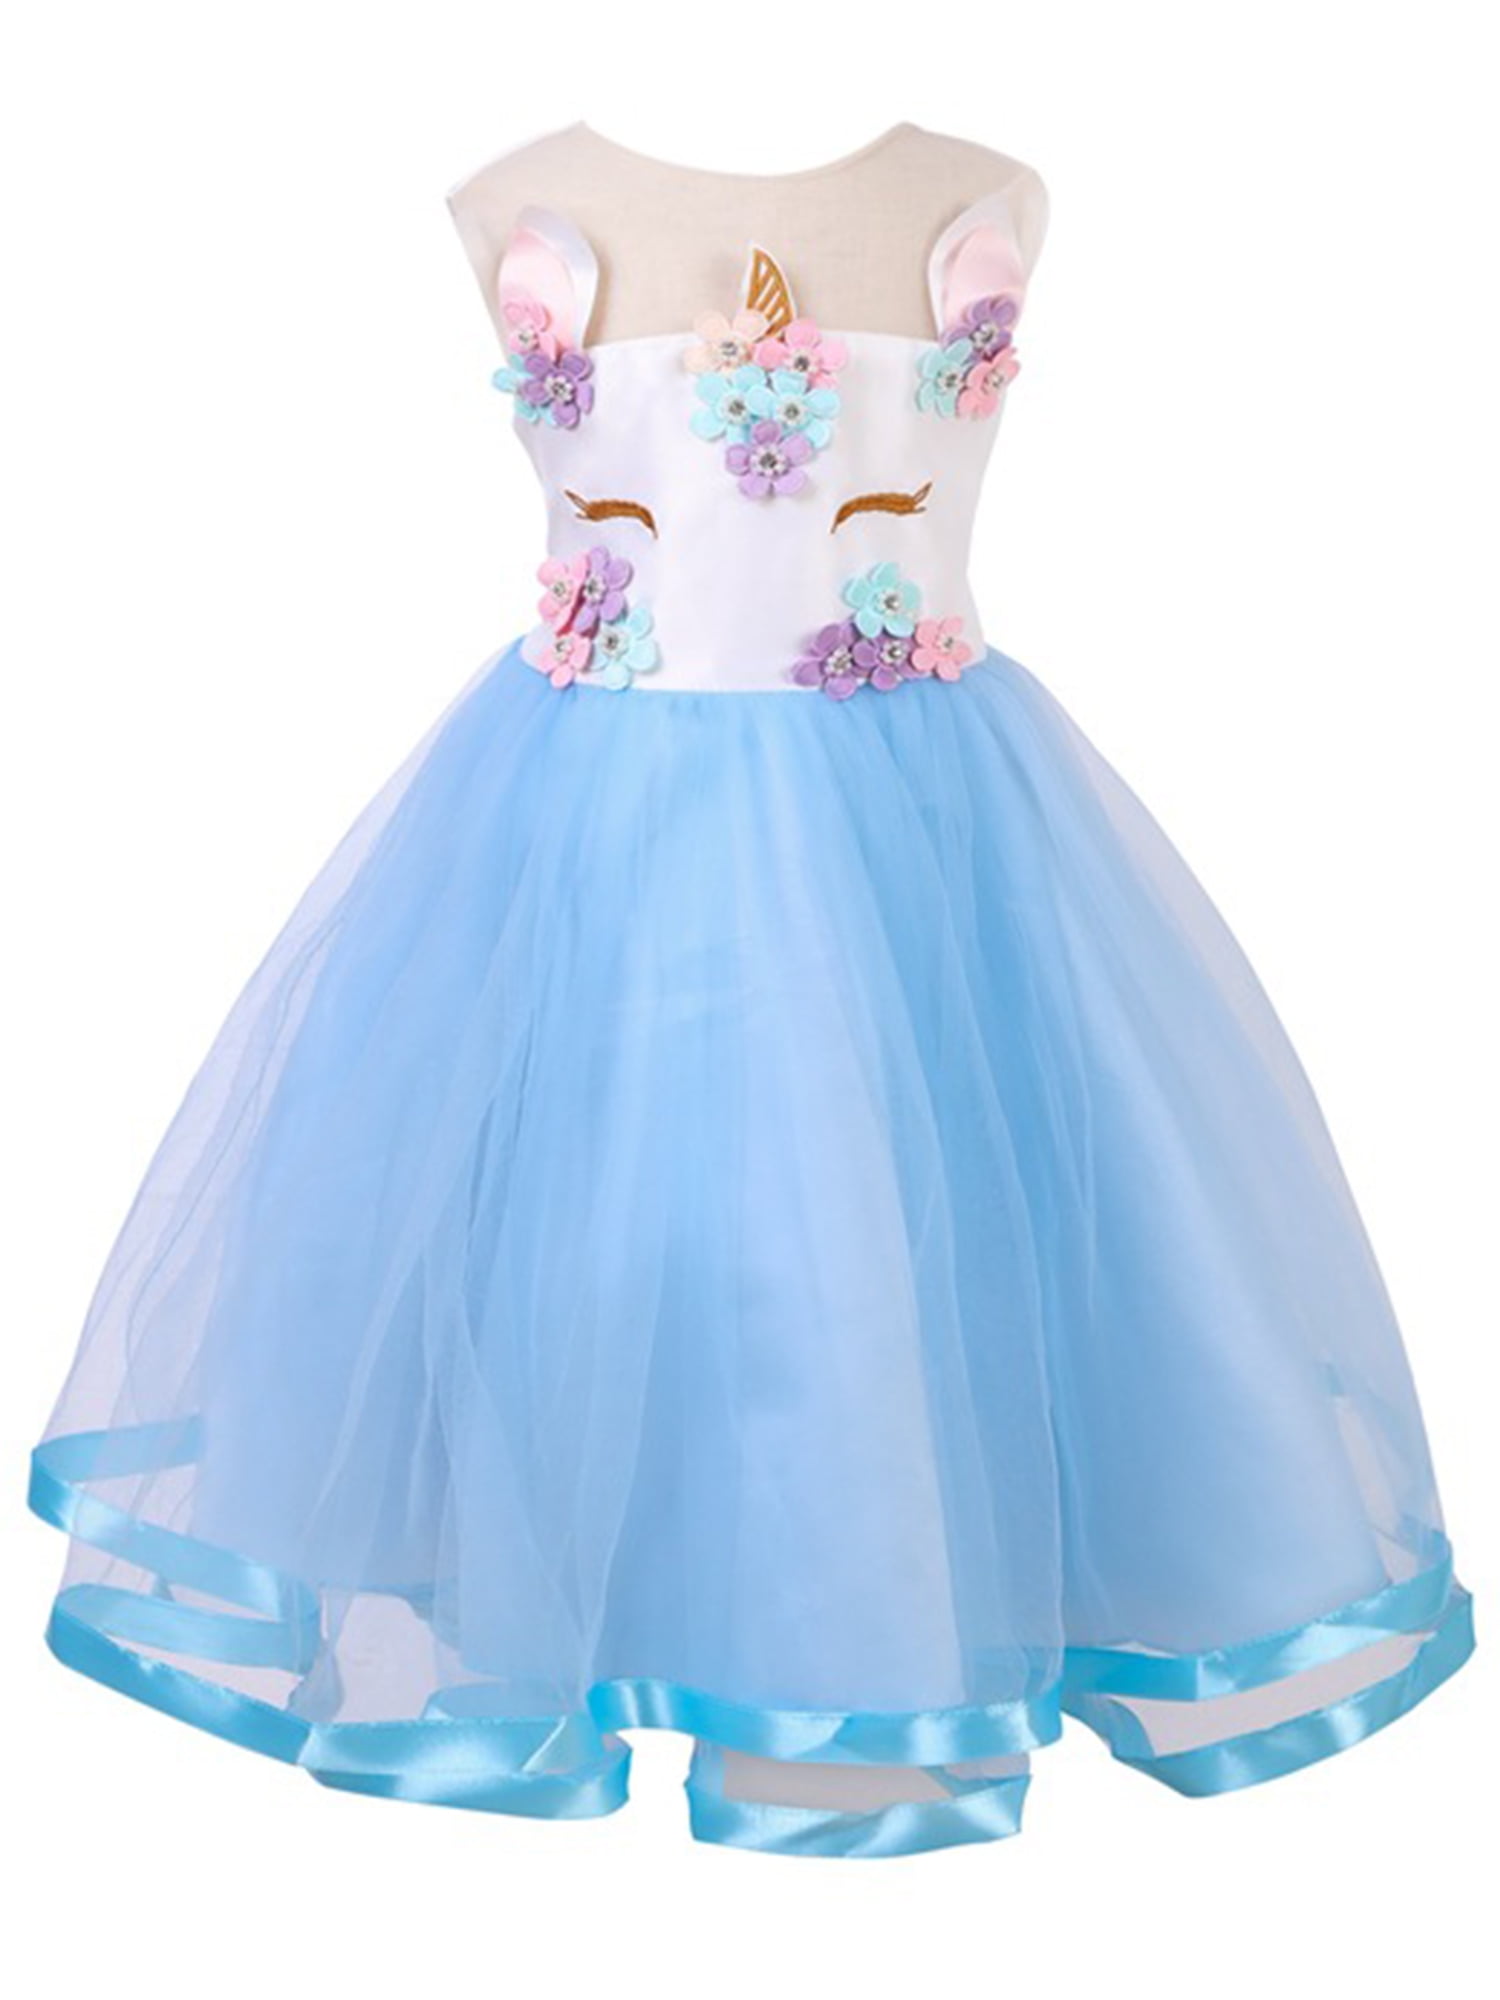 Girls party princess dress fancy dress costume dress children's wear